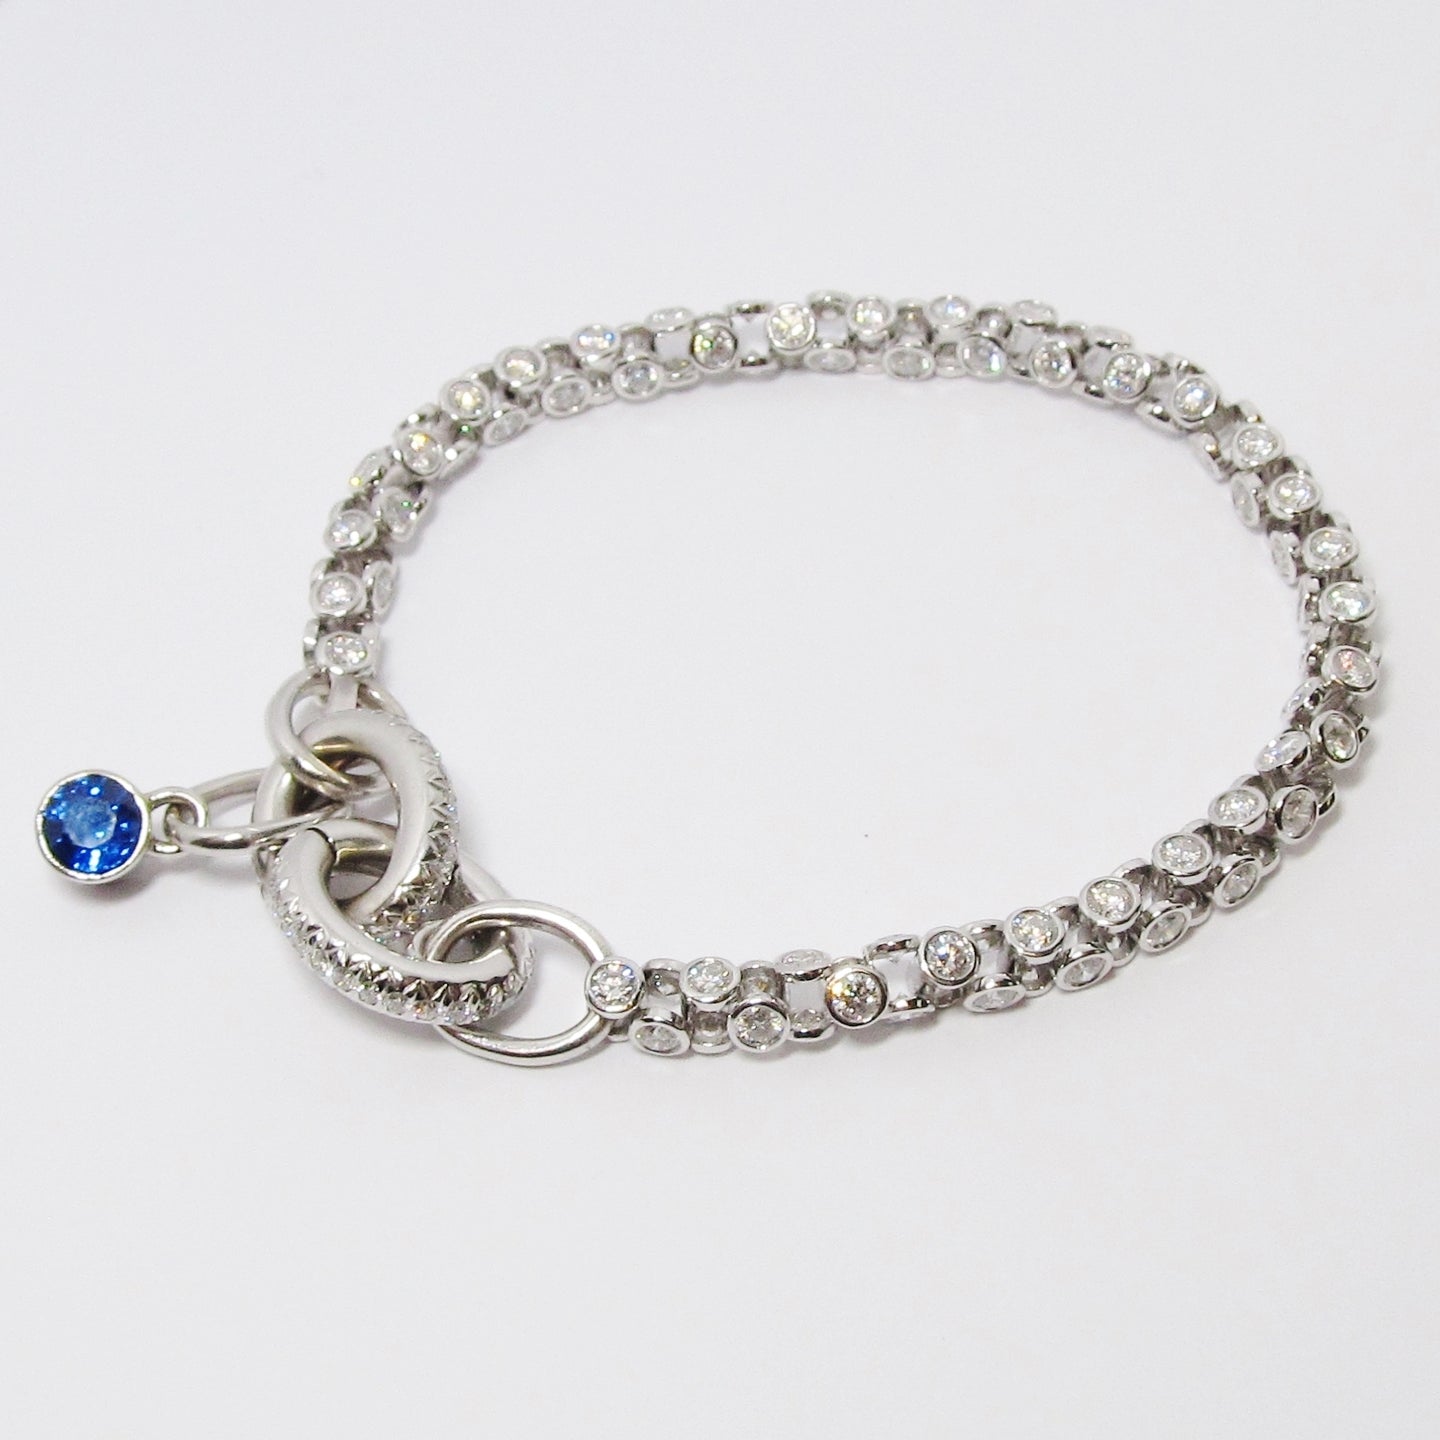 18k White Gold & Diamond Bracelet with Blue Sapphire Accent